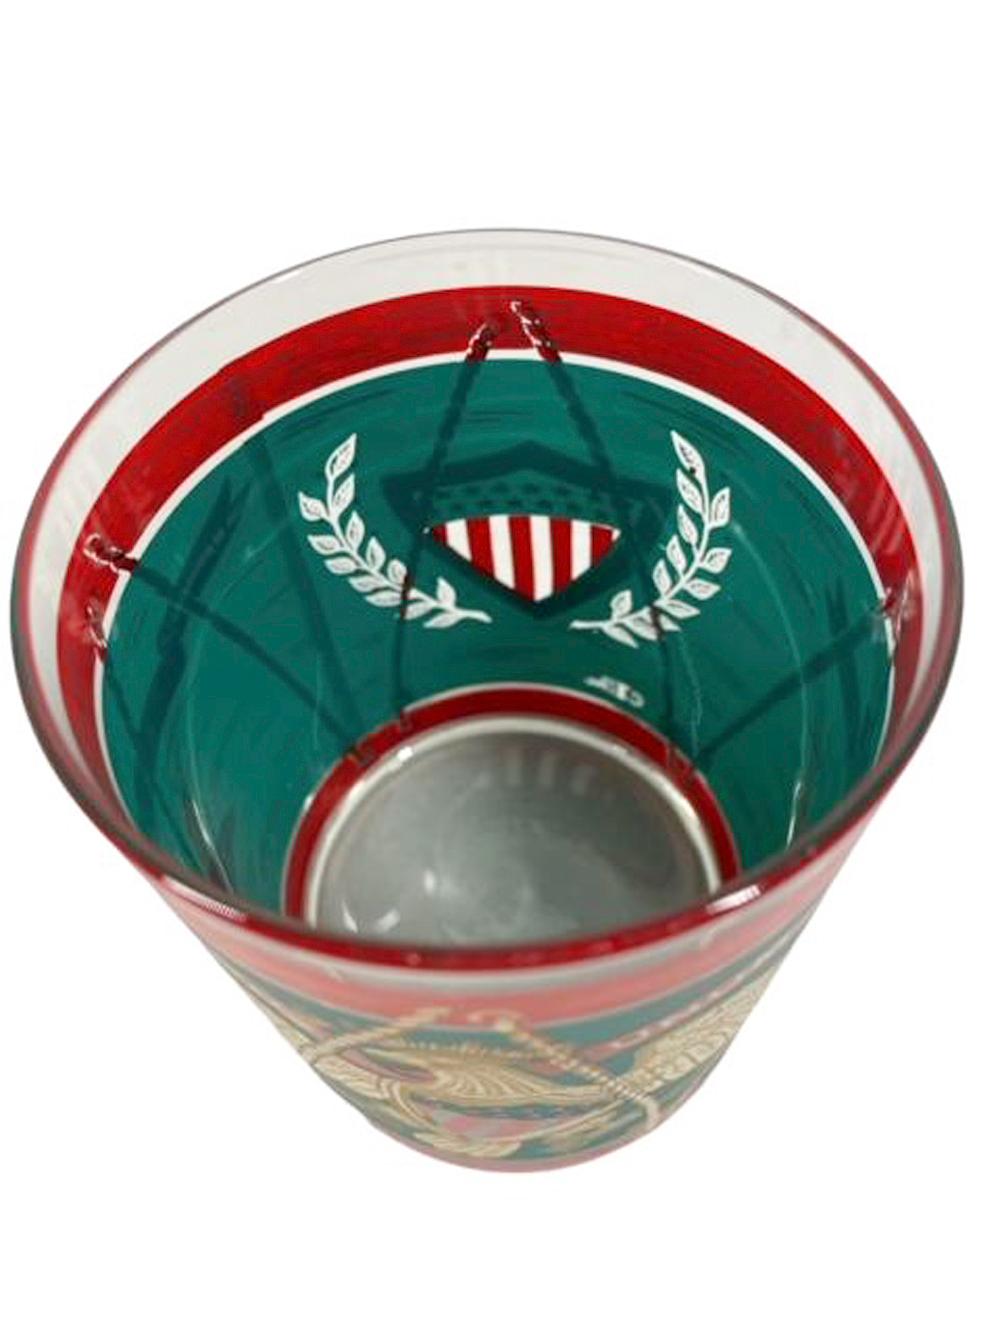 Four Vintage Cera Parade Drum Rocks Glasses with Eagle and Shield Design For Sale 2